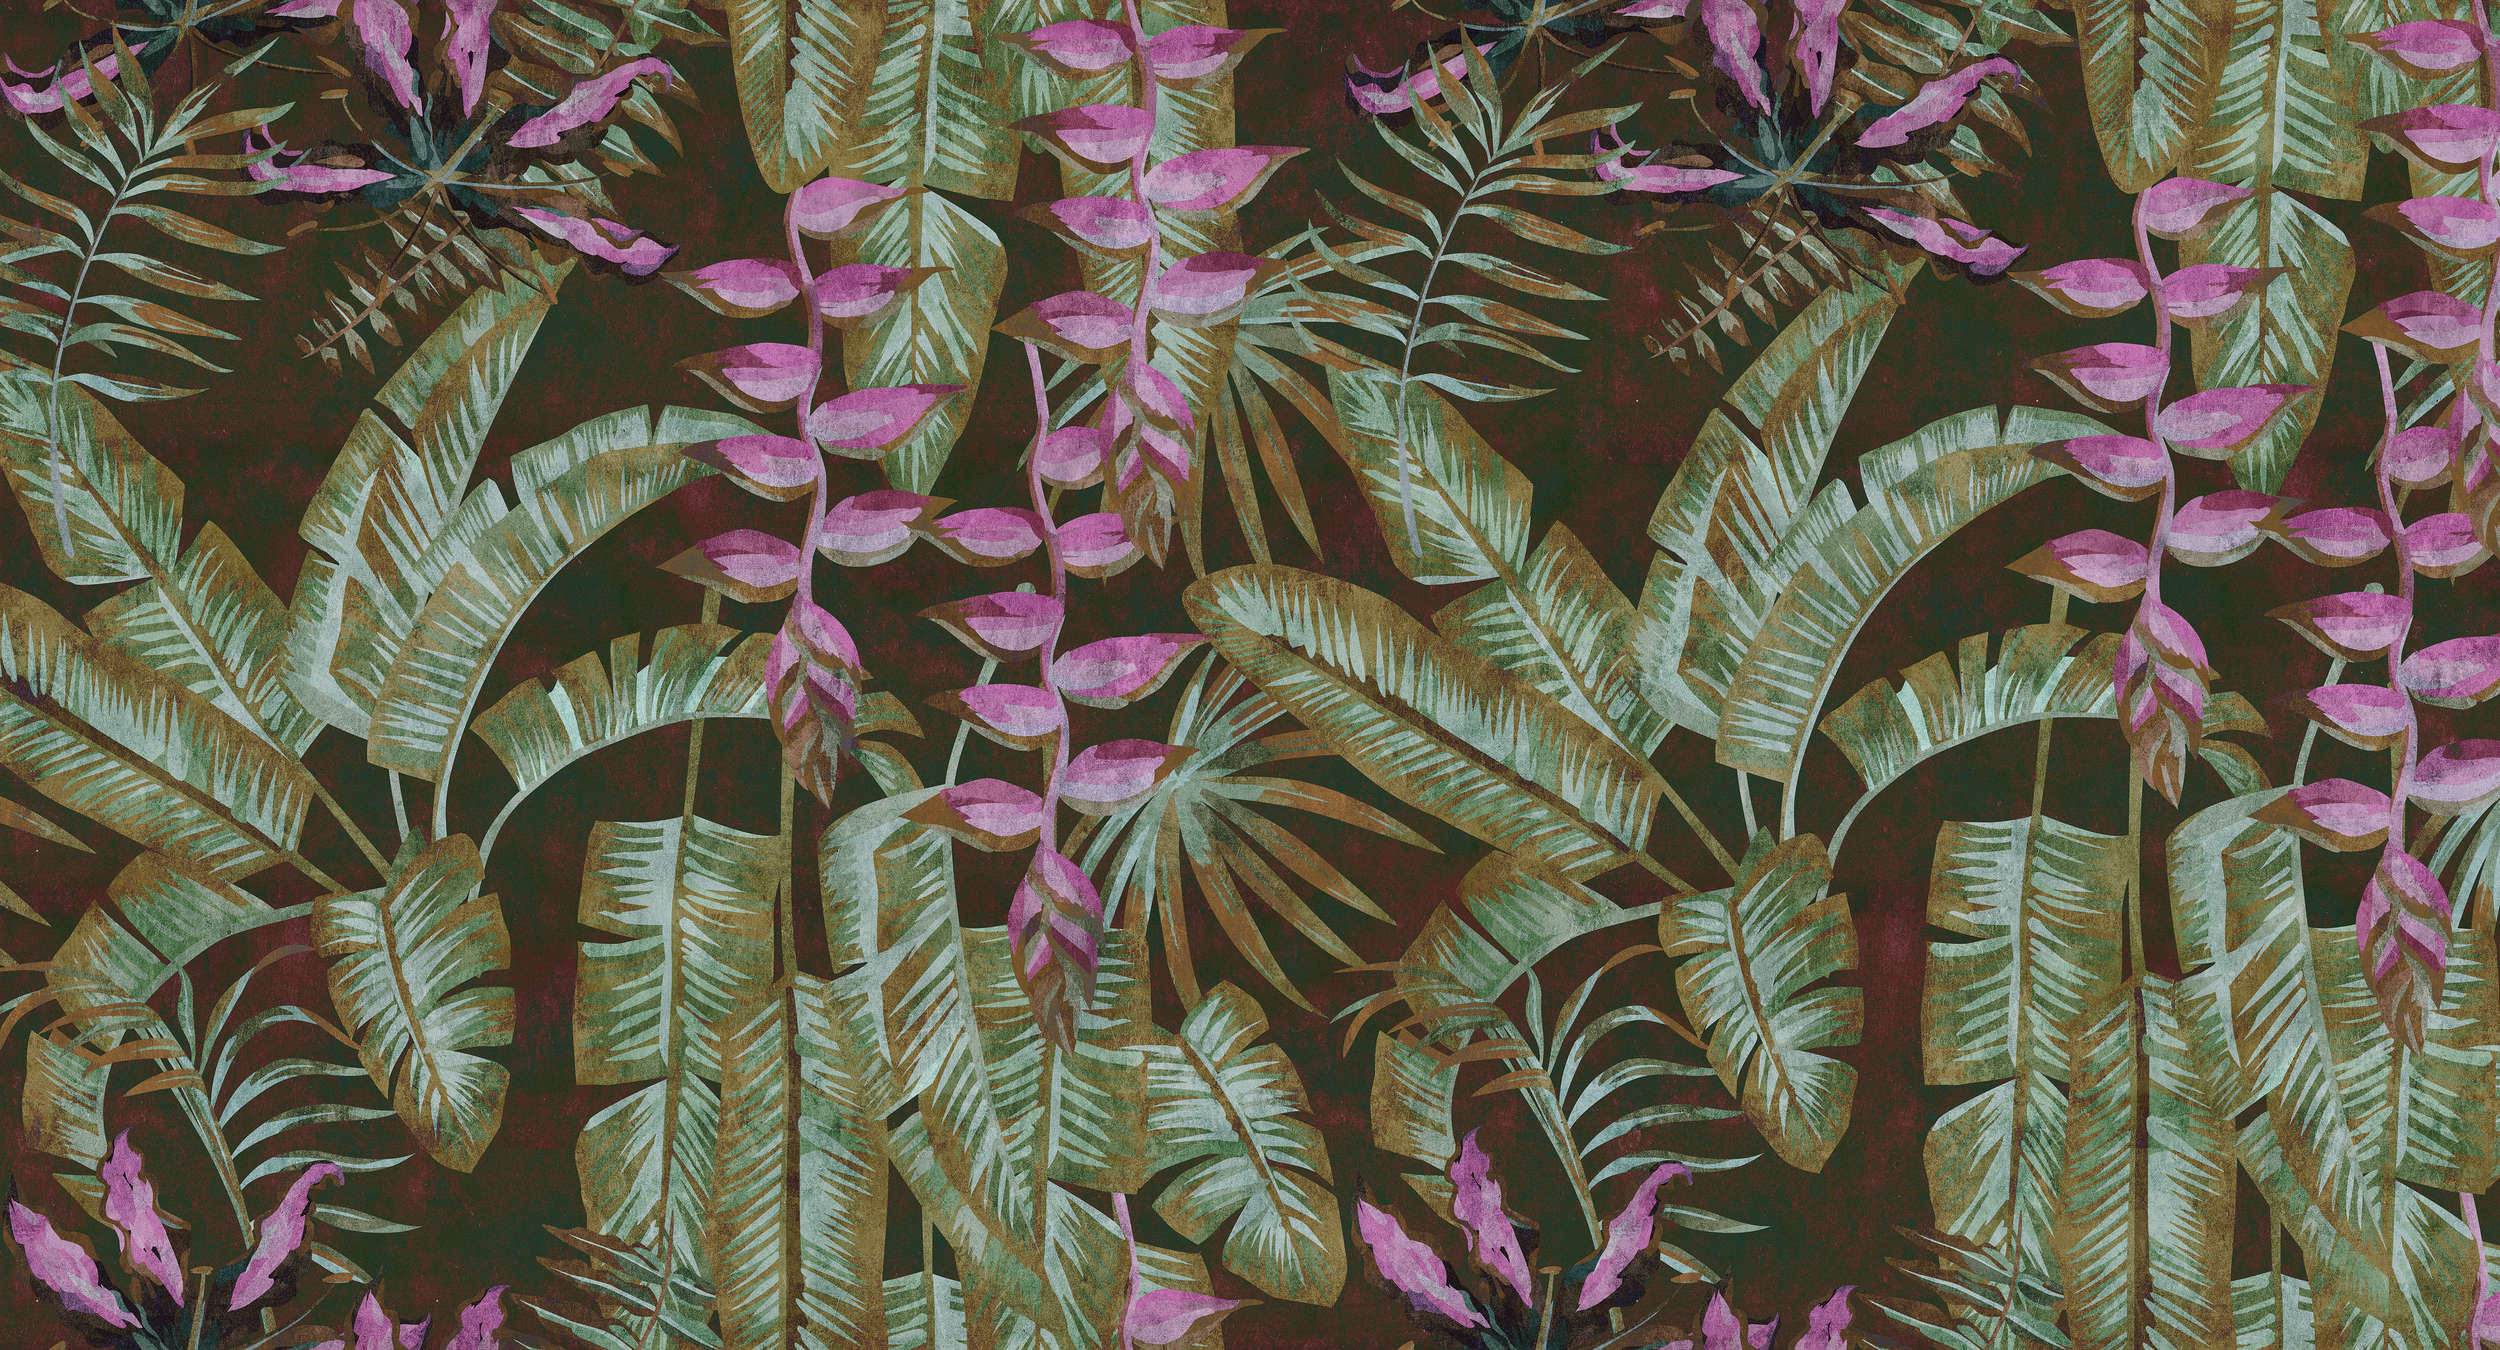             Tropicana 1 - Carta da parati Jungle con struttura in carta assorbente Banana Leaves&Farms - Verde, Viola | Premium Smooth Fleece
        